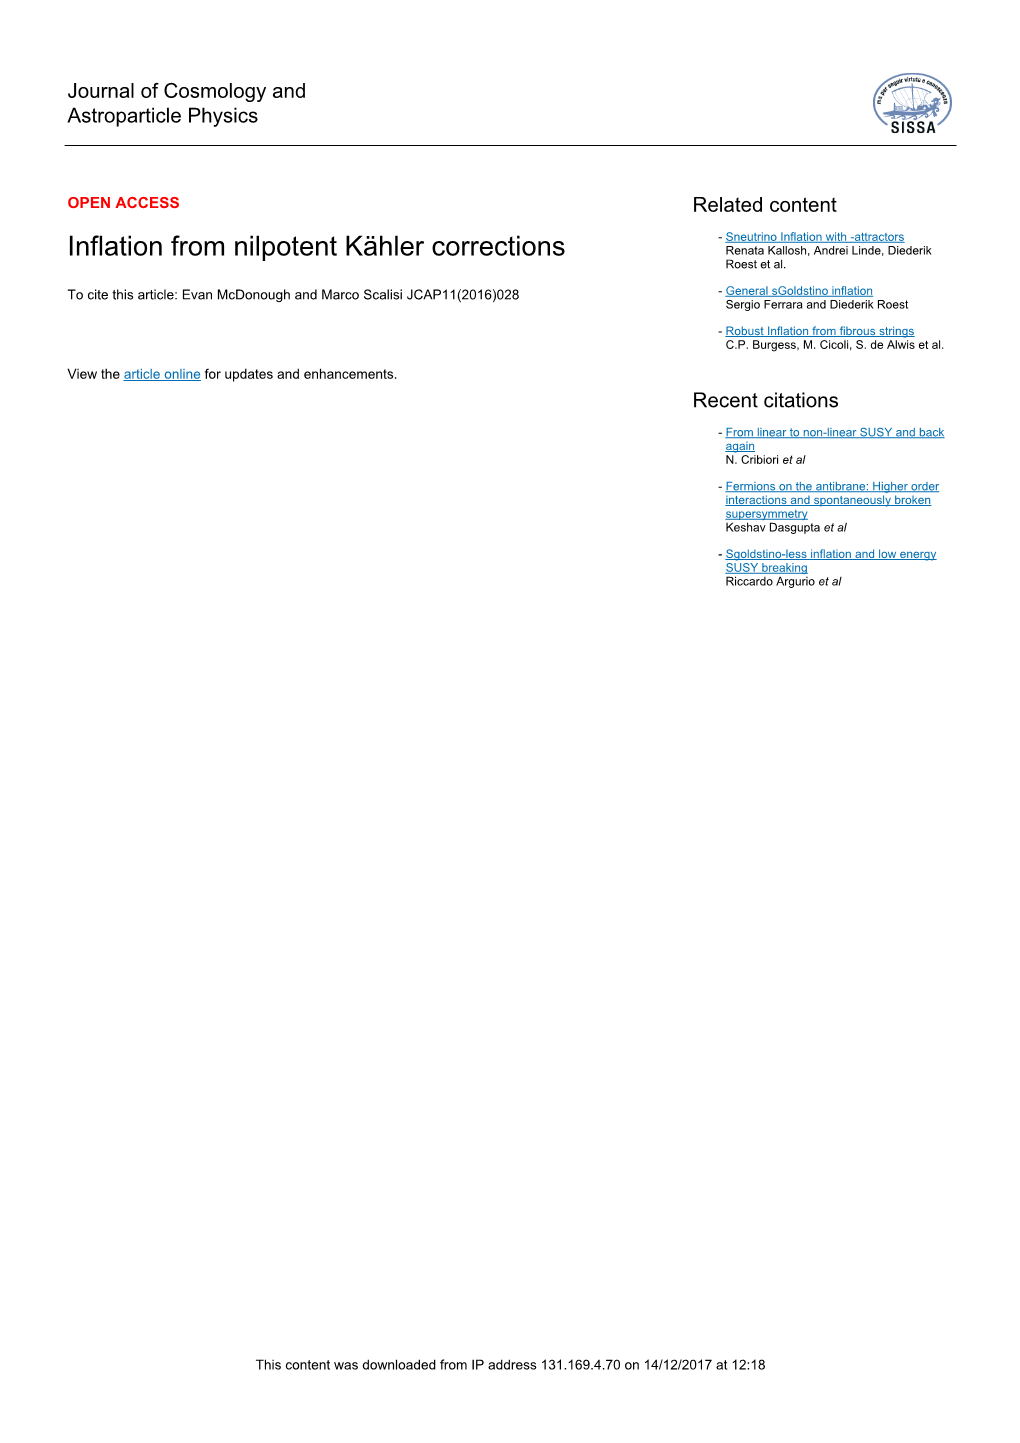 Inflation from Nilpotent Kähler Corrections Renata Kallosh, Andrei Linde, Diederik Roest Et Al